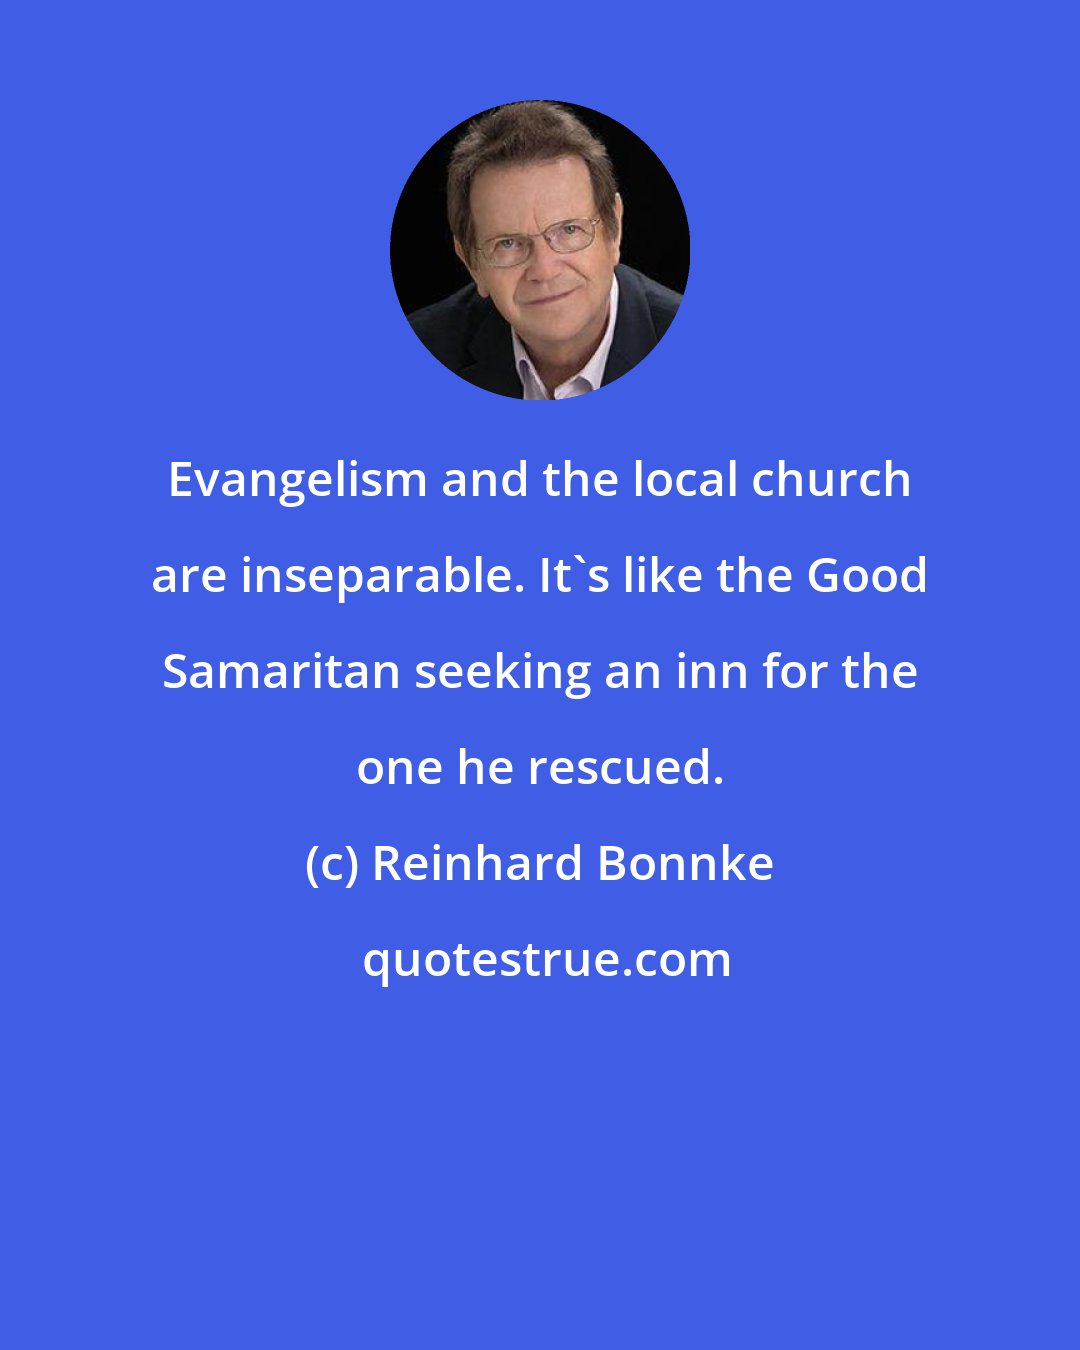 Reinhard Bonnke: Evangelism and the local church are inseparable. It's like the Good Samaritan seeking an inn for the one he rescued.